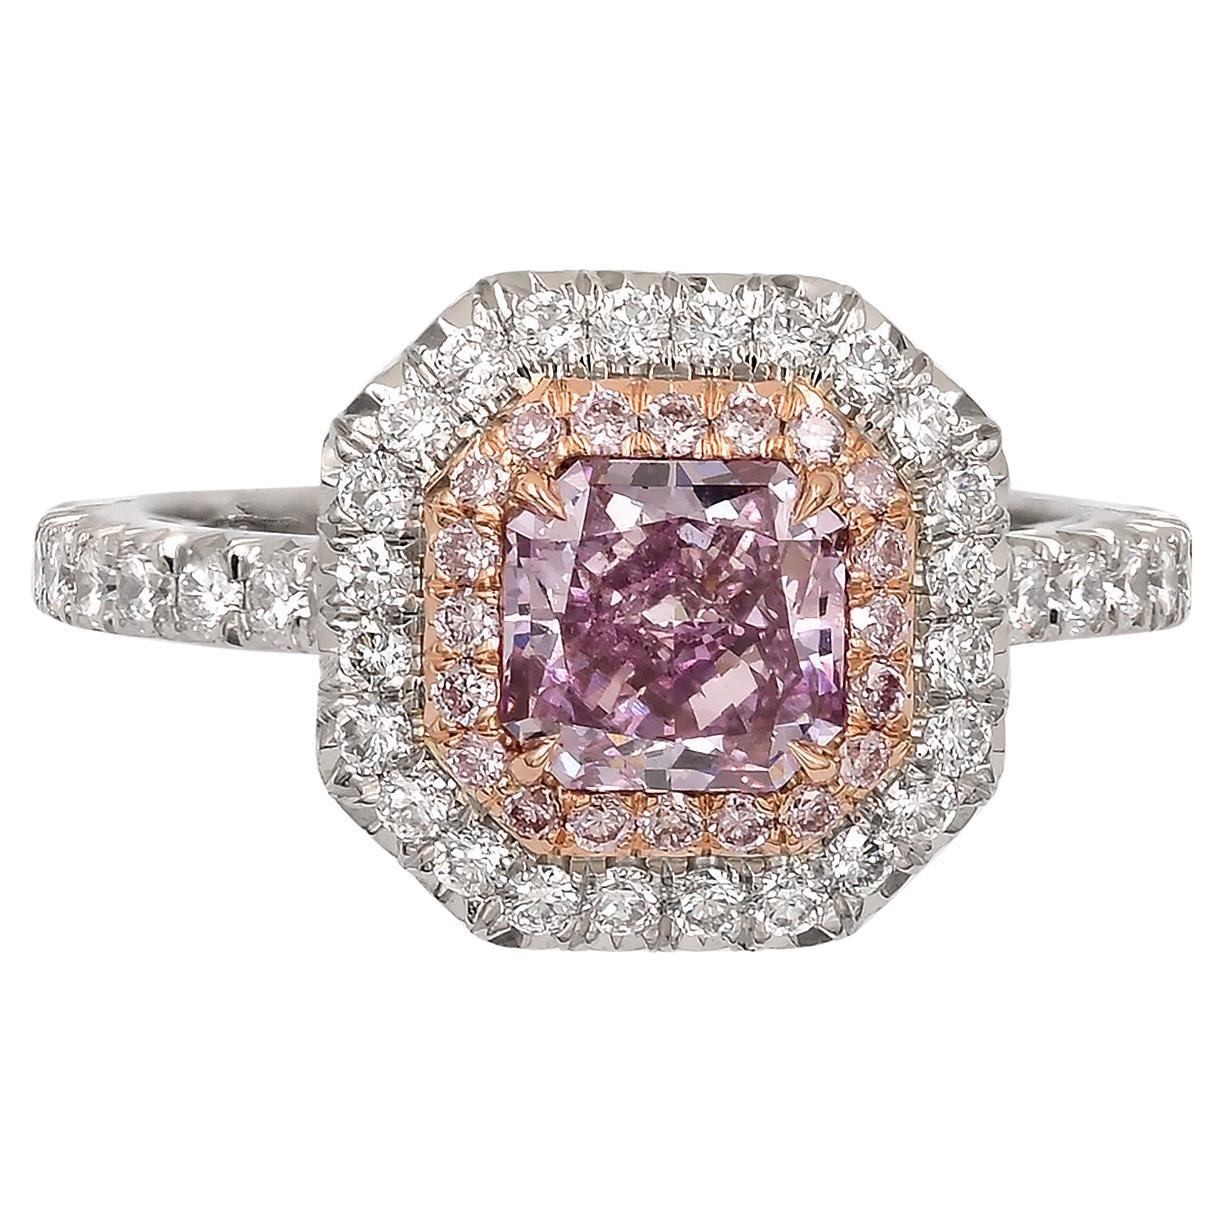 Spectra Fine Jewelry GIA Certified 1.1 Carat Pink Purple Diamond Ring